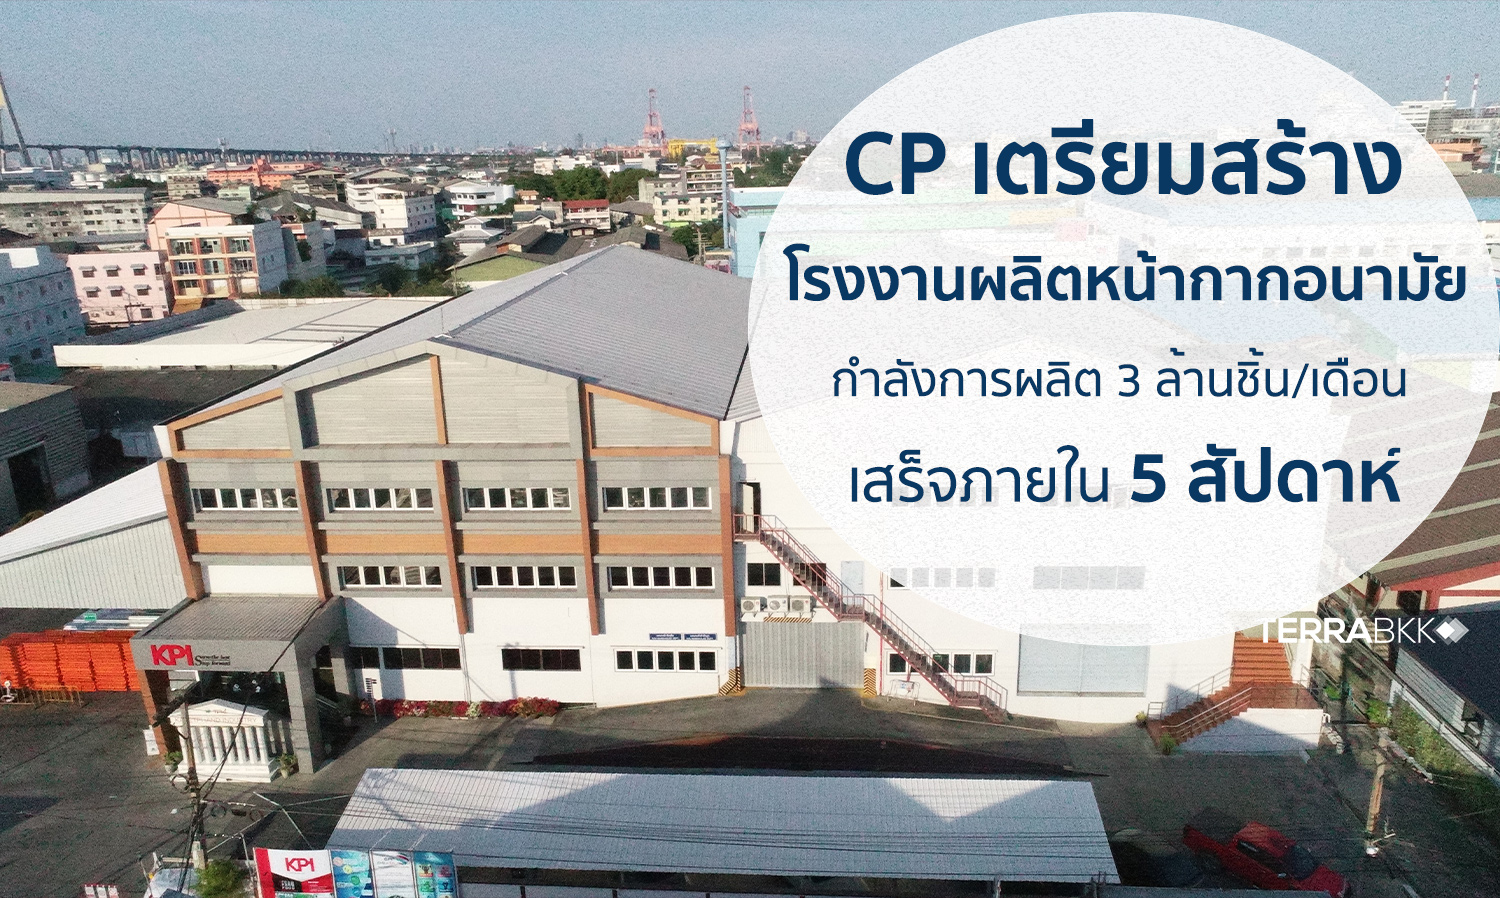 CP ใช้พื้นที่โรงงานเกษตรภัณฑ์อุตสาหกรรม พระประแดง เตรียมสร้างโรงงานผลิตหน้ากากอนามัย คาดเสร็จภายใน 5 สัปดาห์